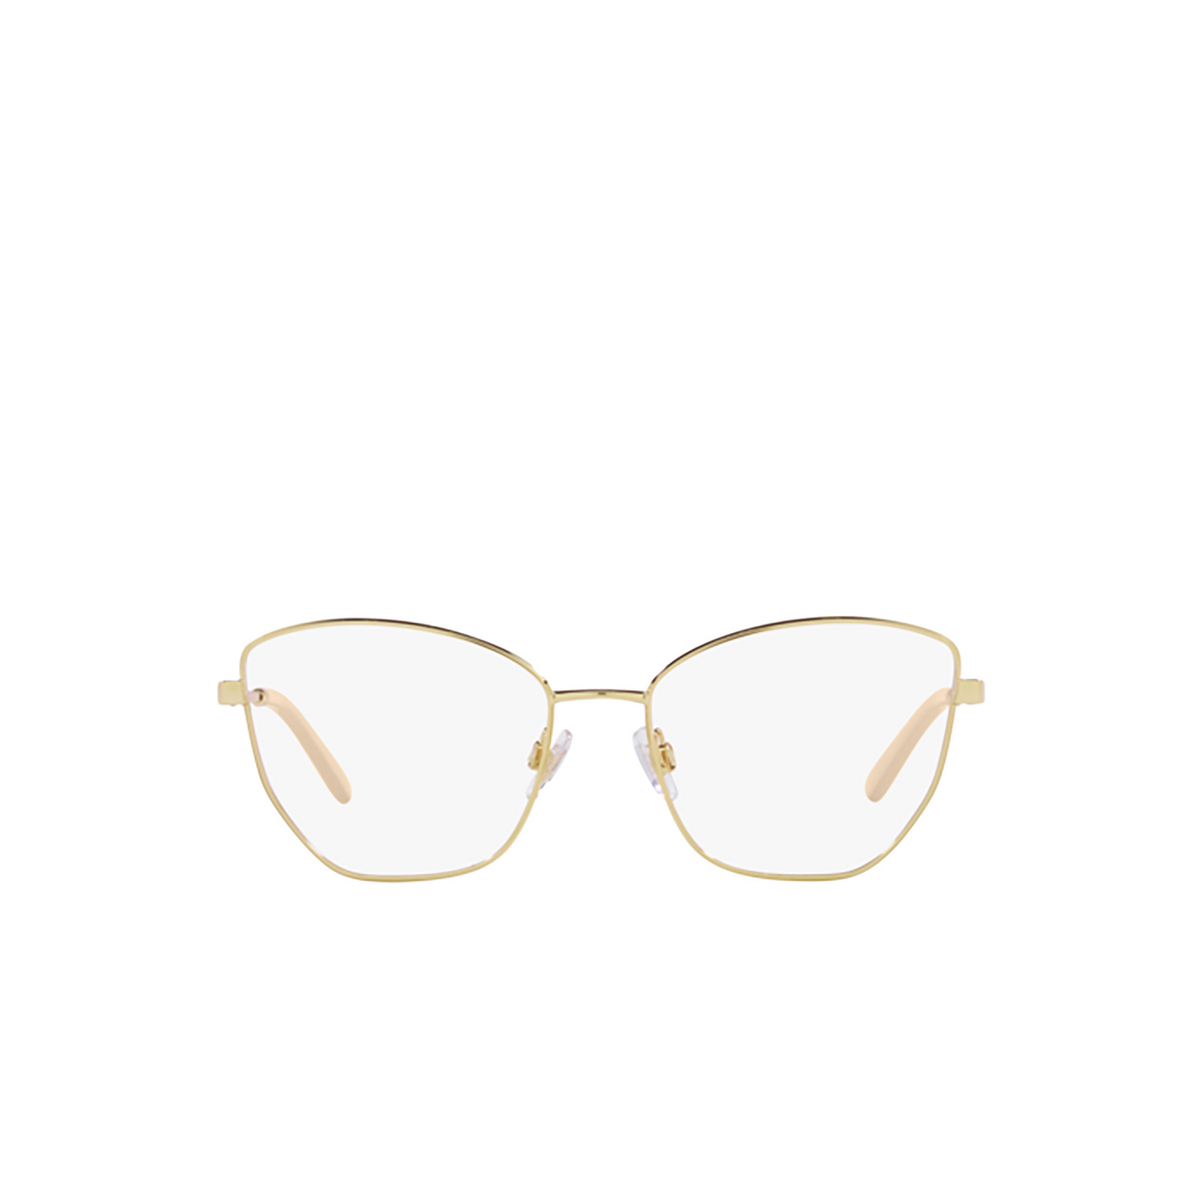 Dolce & Gabbana DG1340 Eyeglasses 02 Gold - front view